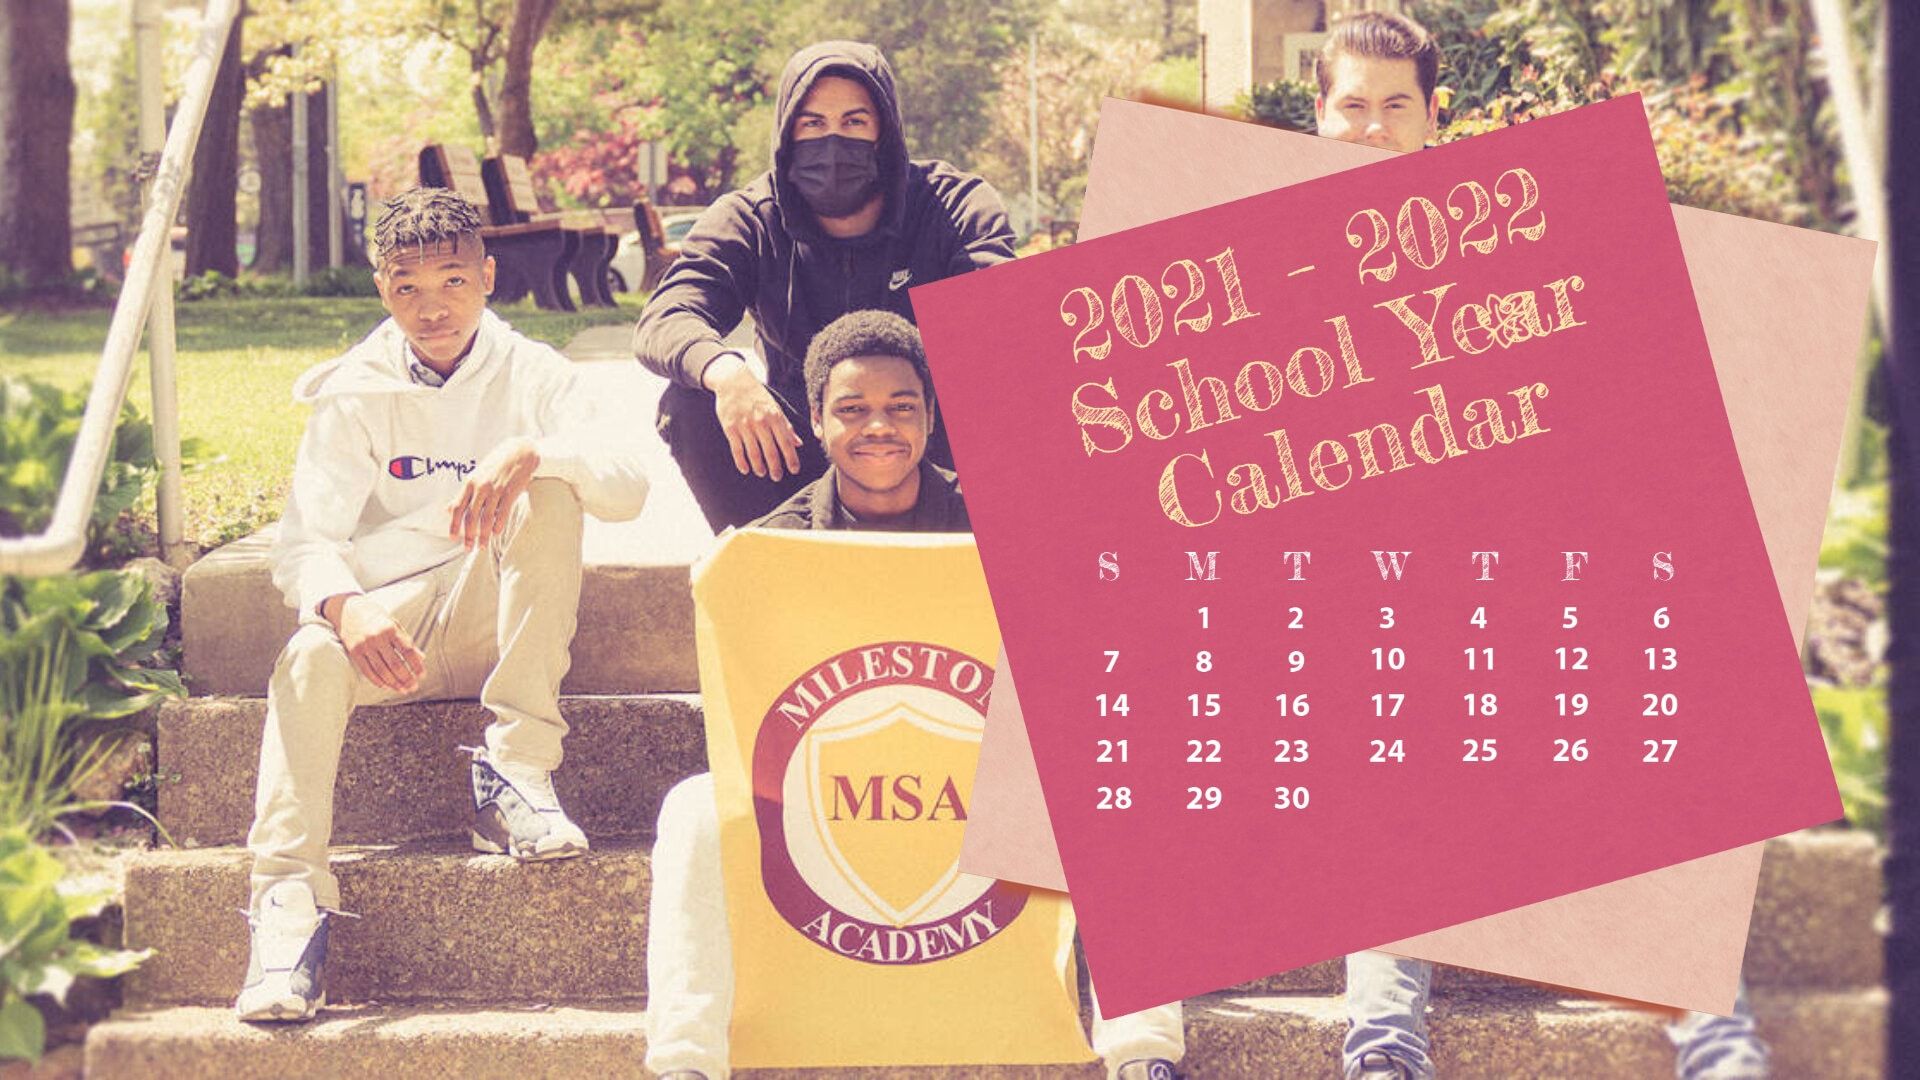 MileStone Academy 2021 - 2022 School Year Calendar